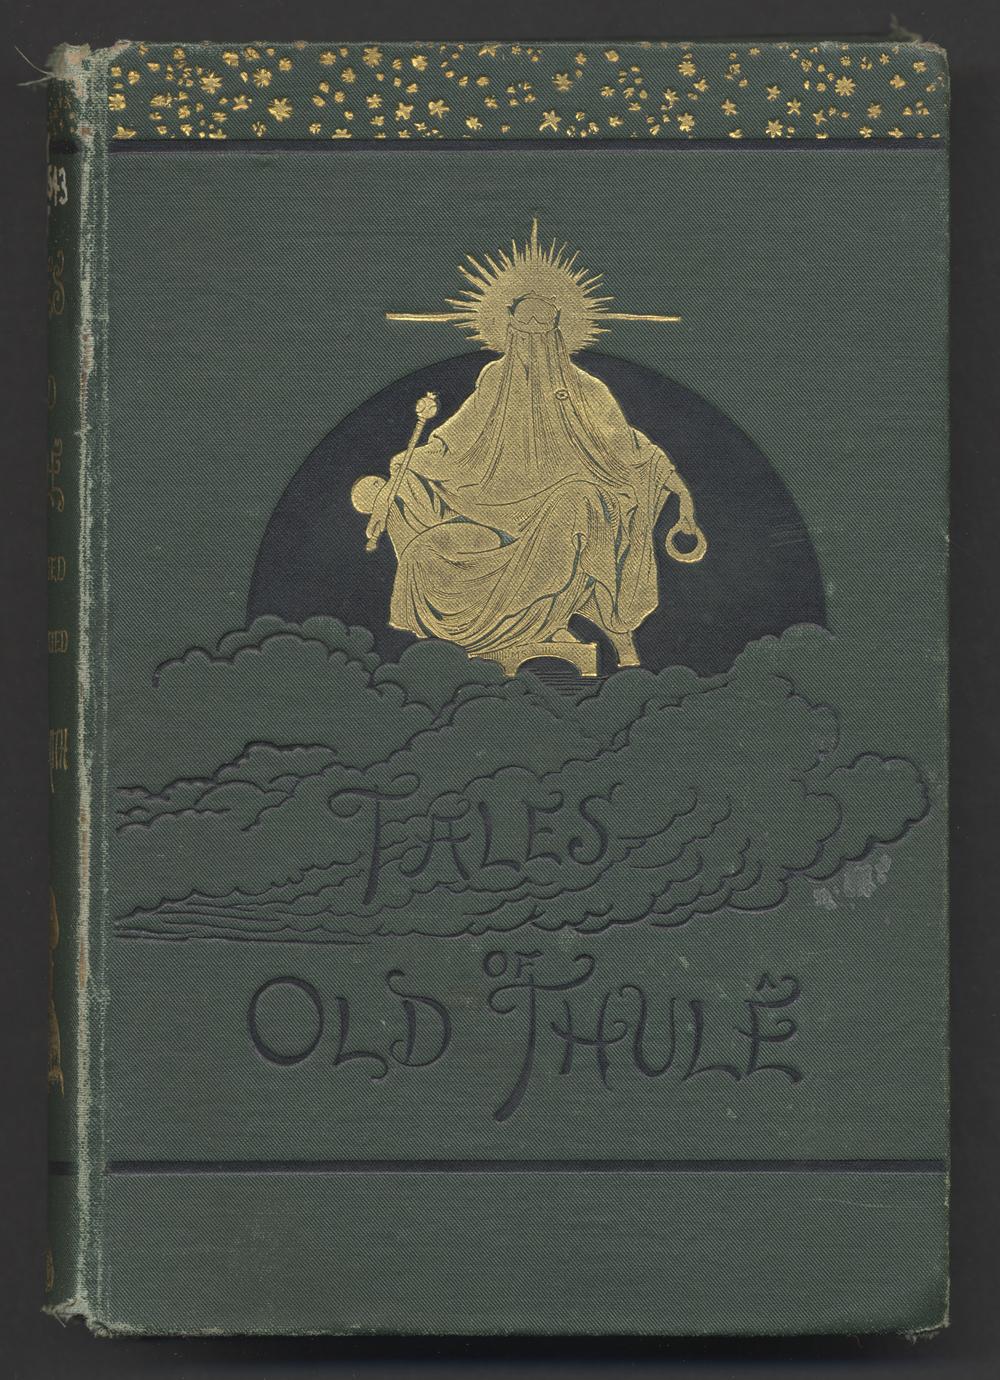 Tales of old Thulê (1 of 3)